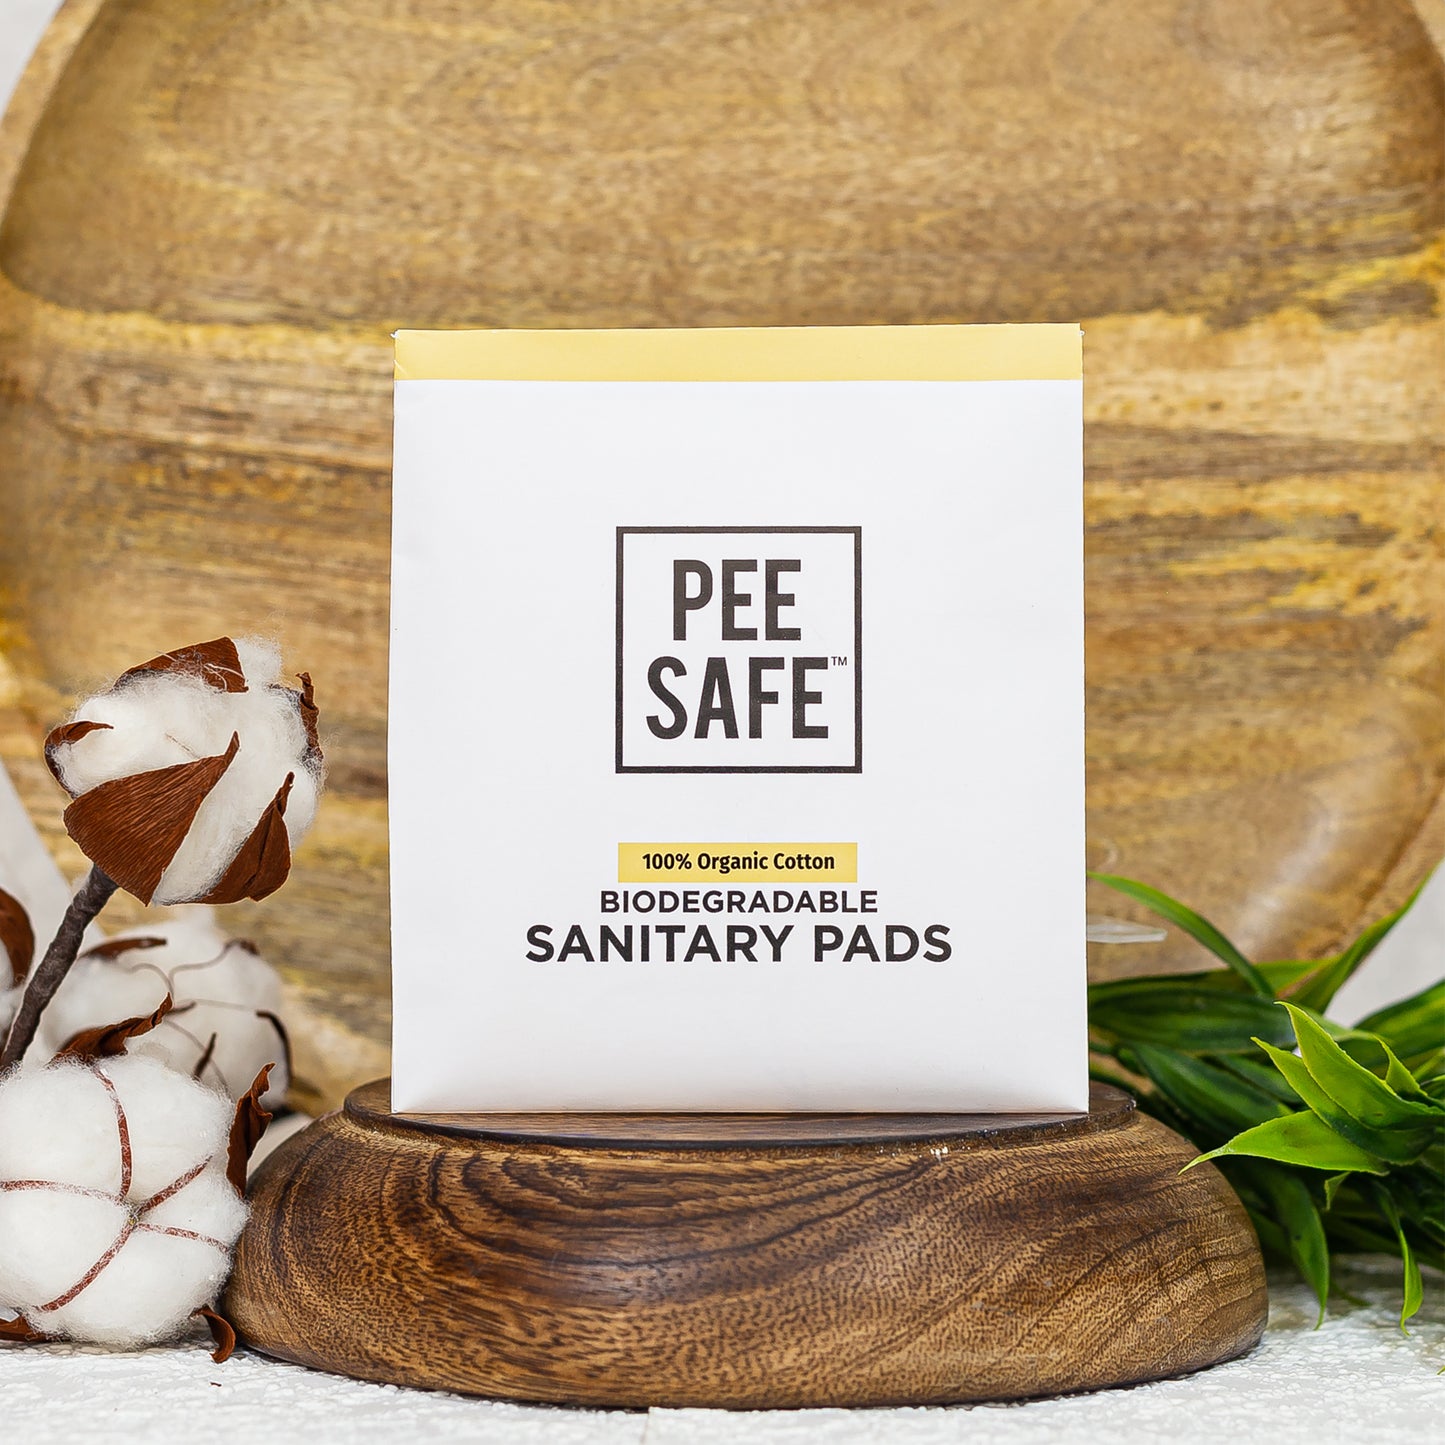 Pee Safe 100% Organic Cotton, Biodegradable Sanitary Pads - Regular (Pack of 10)